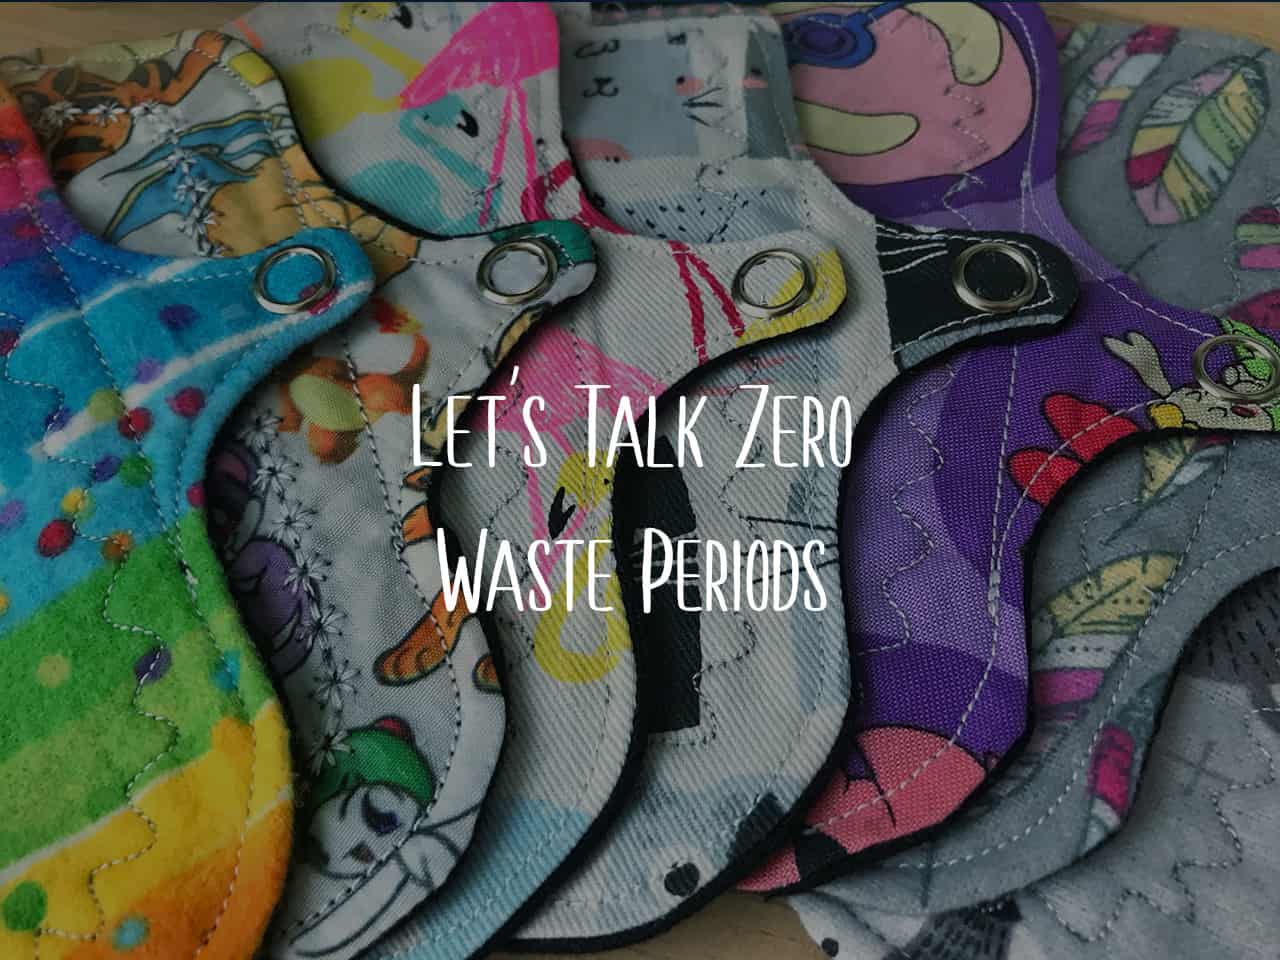 Zero waste periods blog, reusable pads